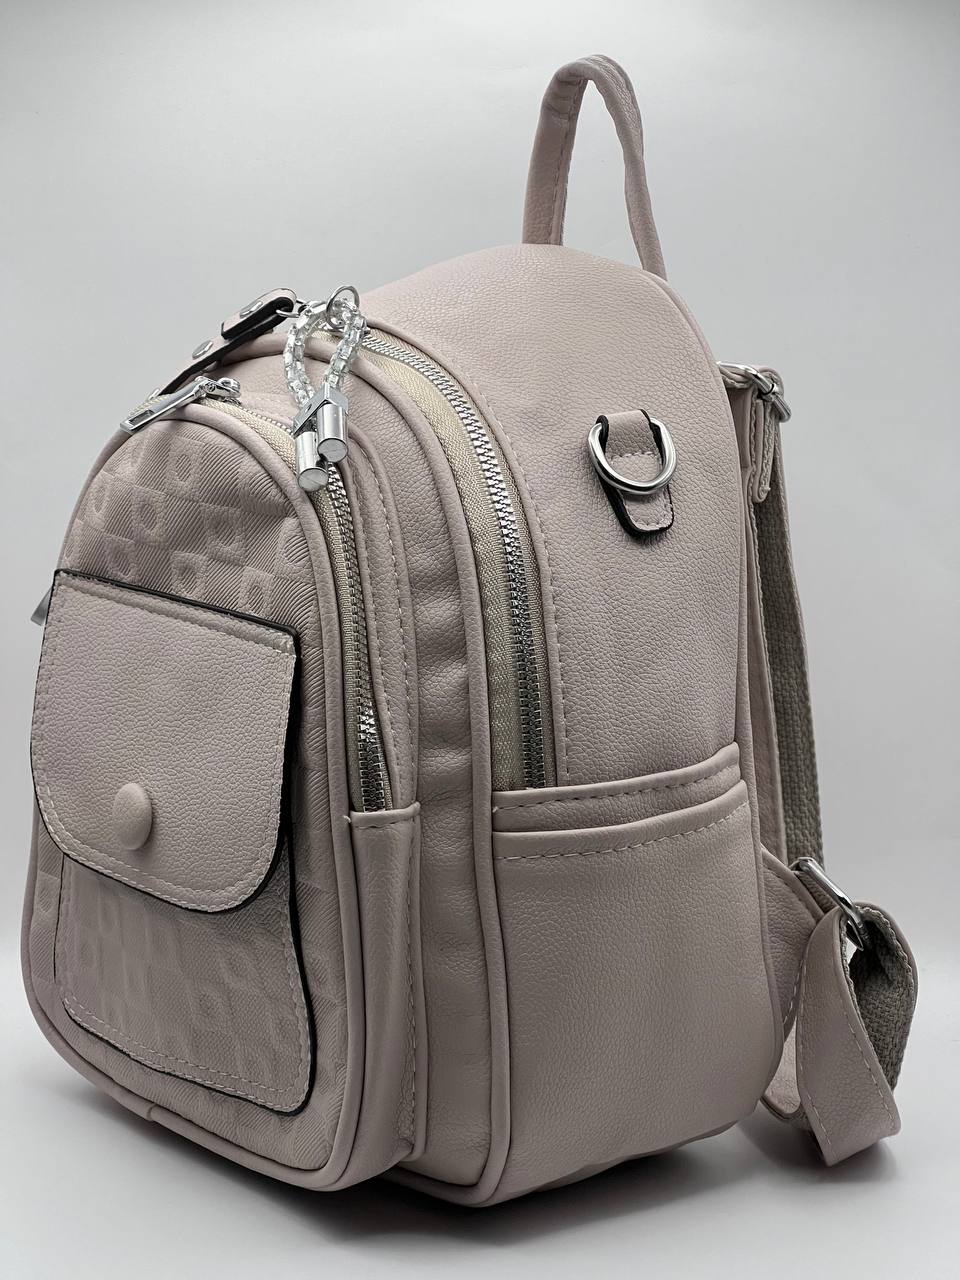 Сумка-рюкзак женская SunGold Р-92006 розовато-серая, 27х22х12 см